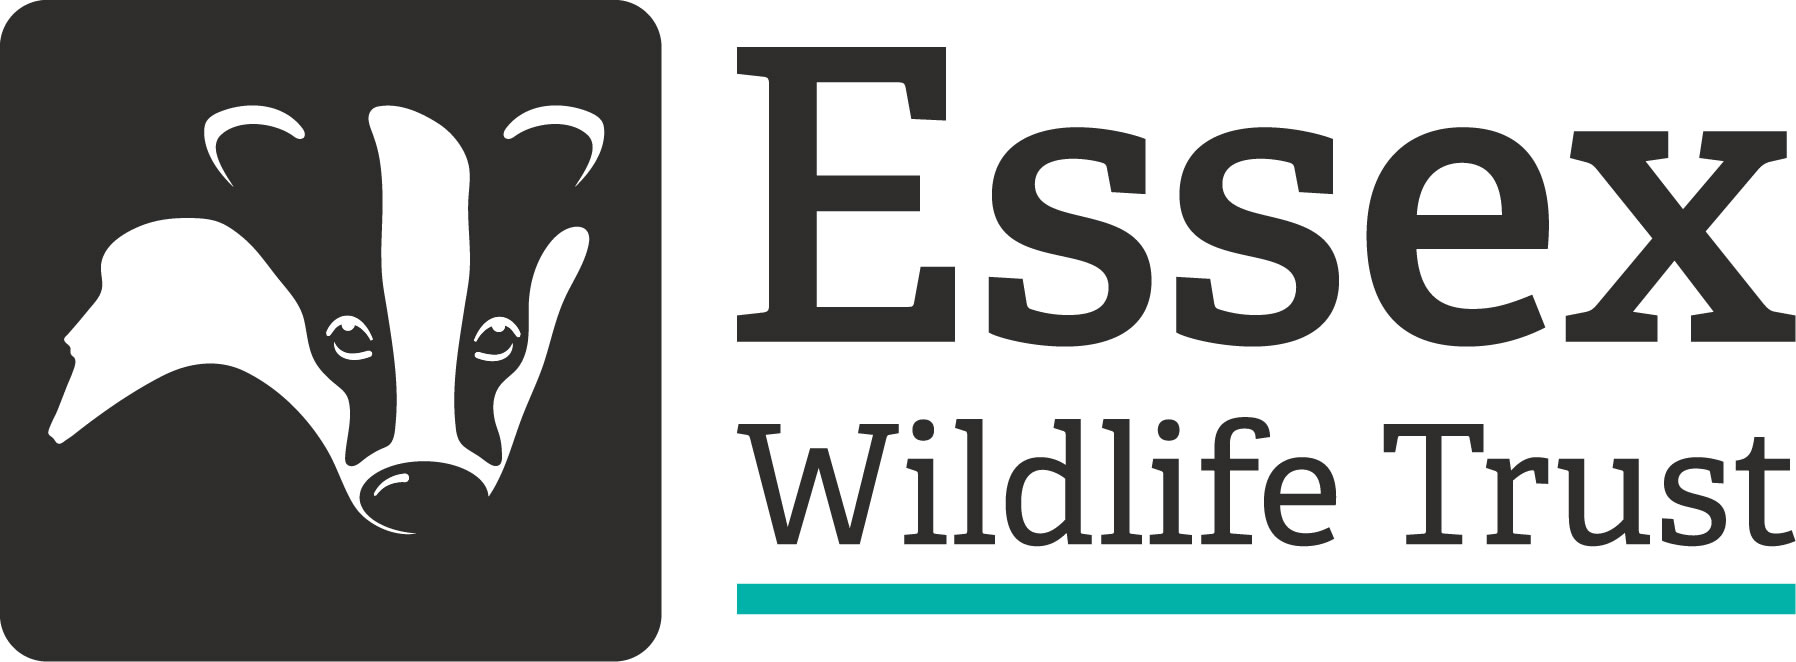 Essex Ecology Services